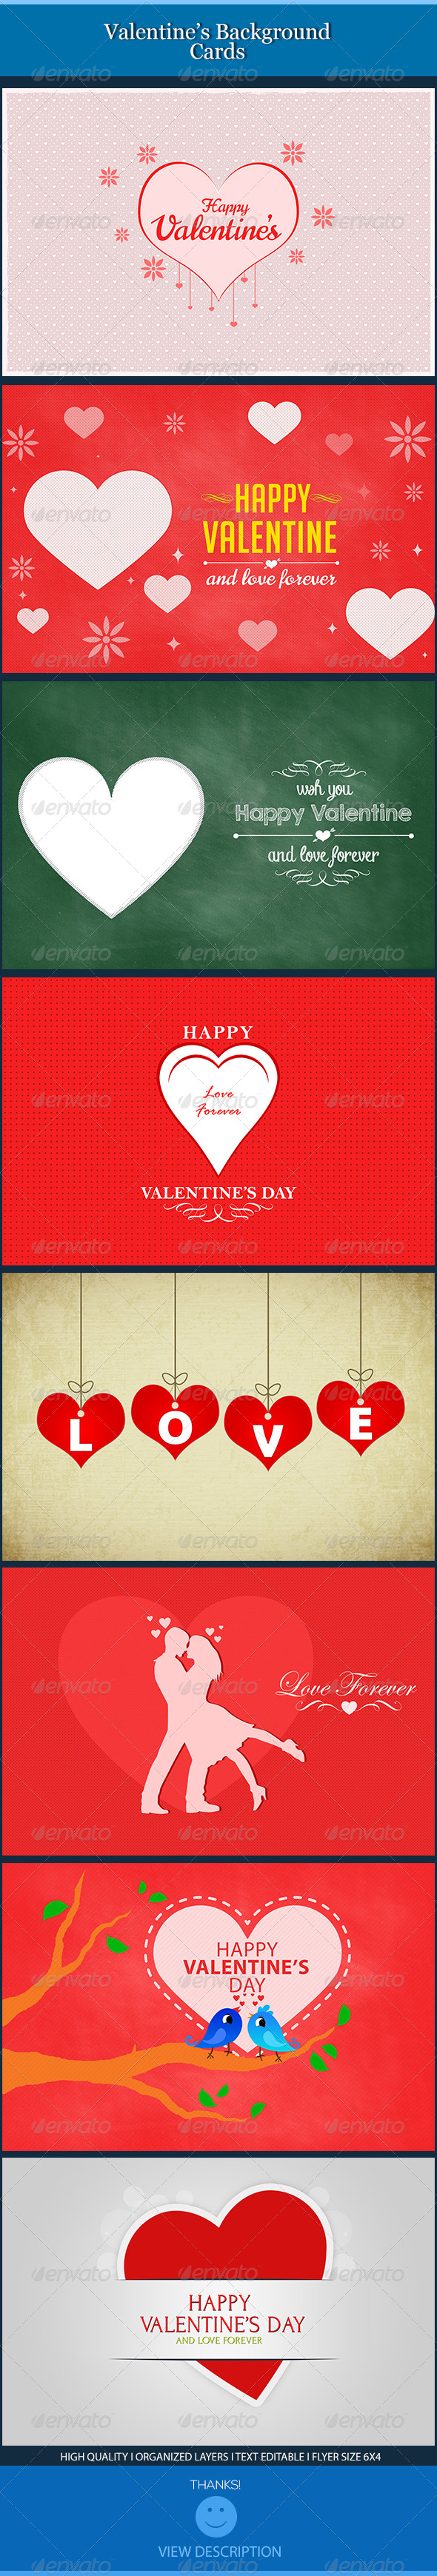 Valentine Backgrounds Cards